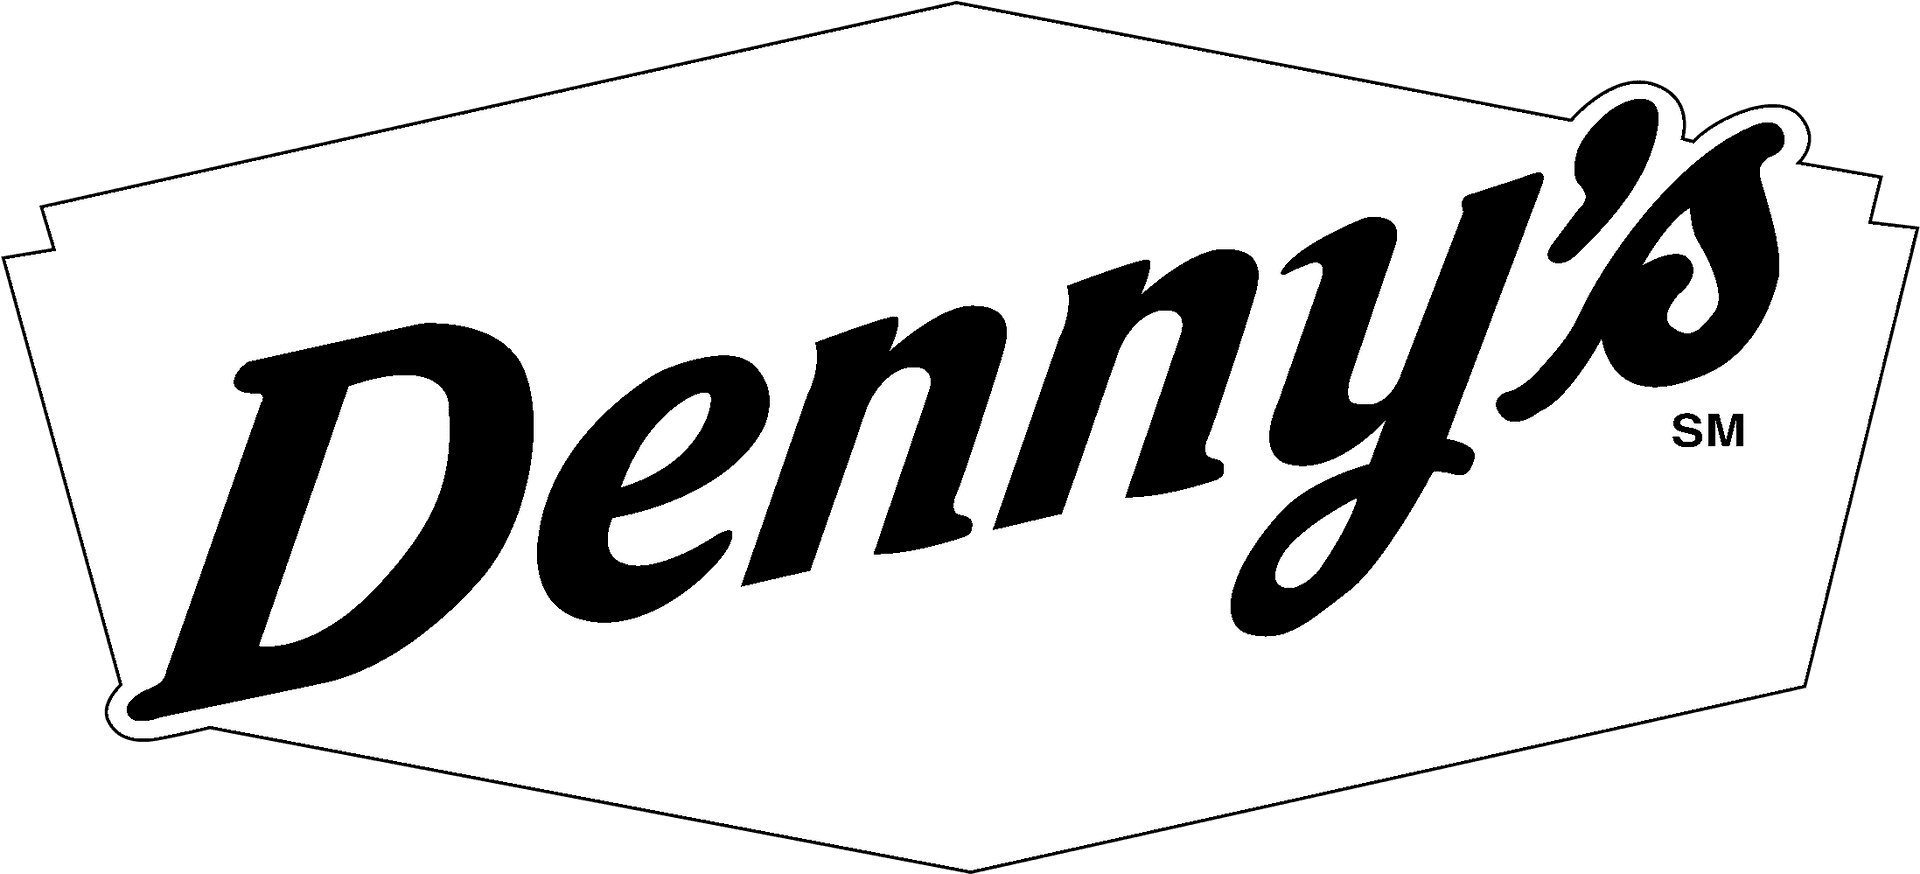 Download Dennys Restaurant Logo | Wallpapers.com